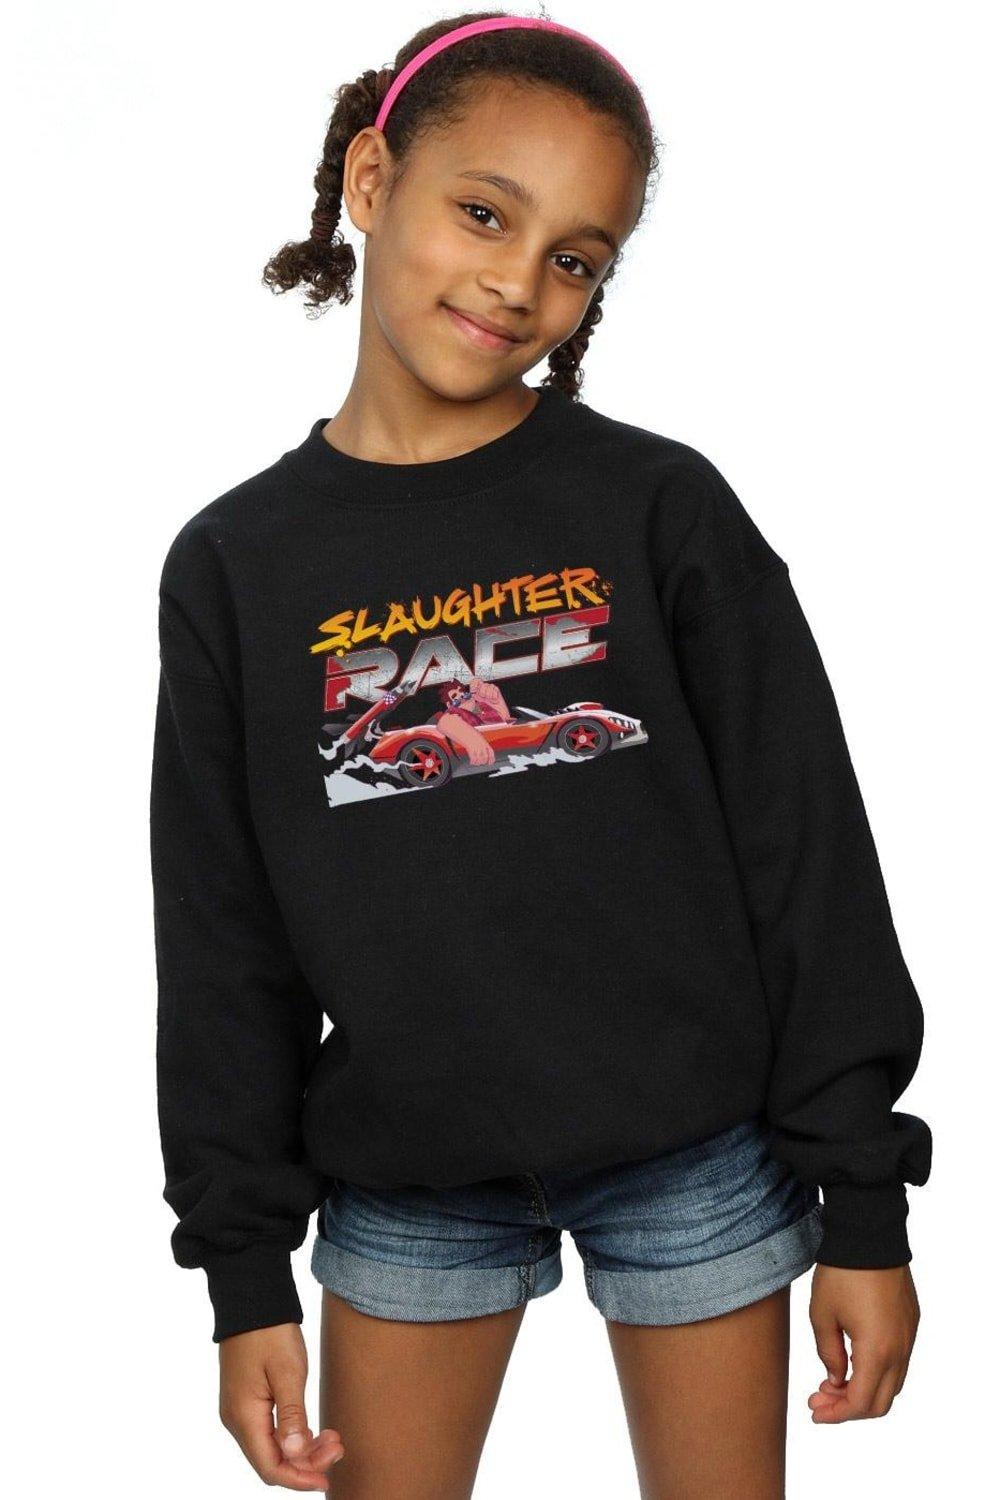 Wreck It Ralph Slaughter Race Sweatshirt